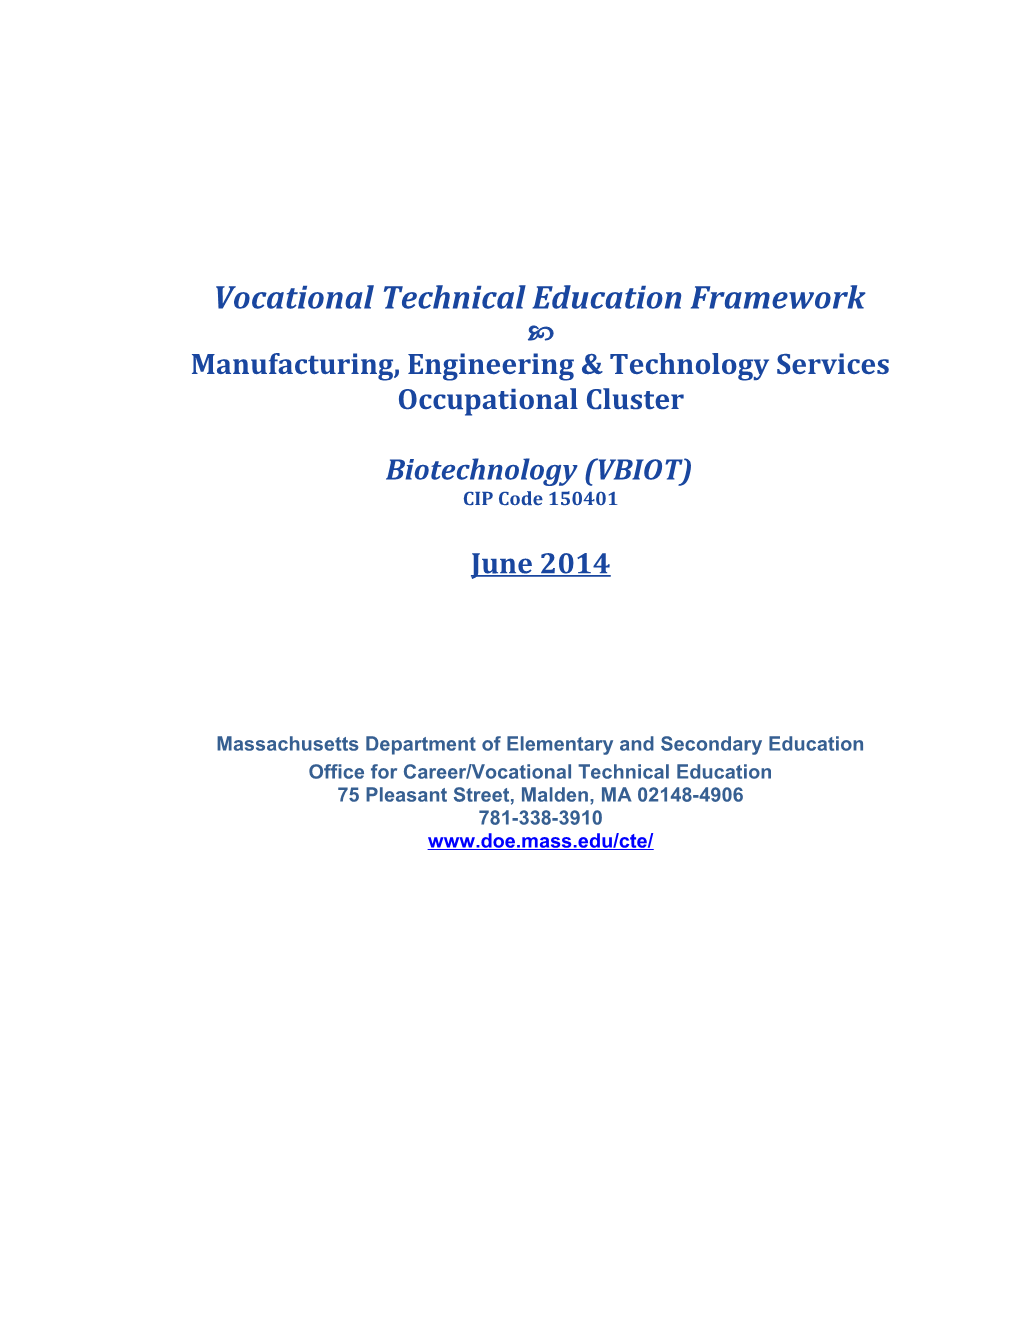 VTE Framework: Biotechnology